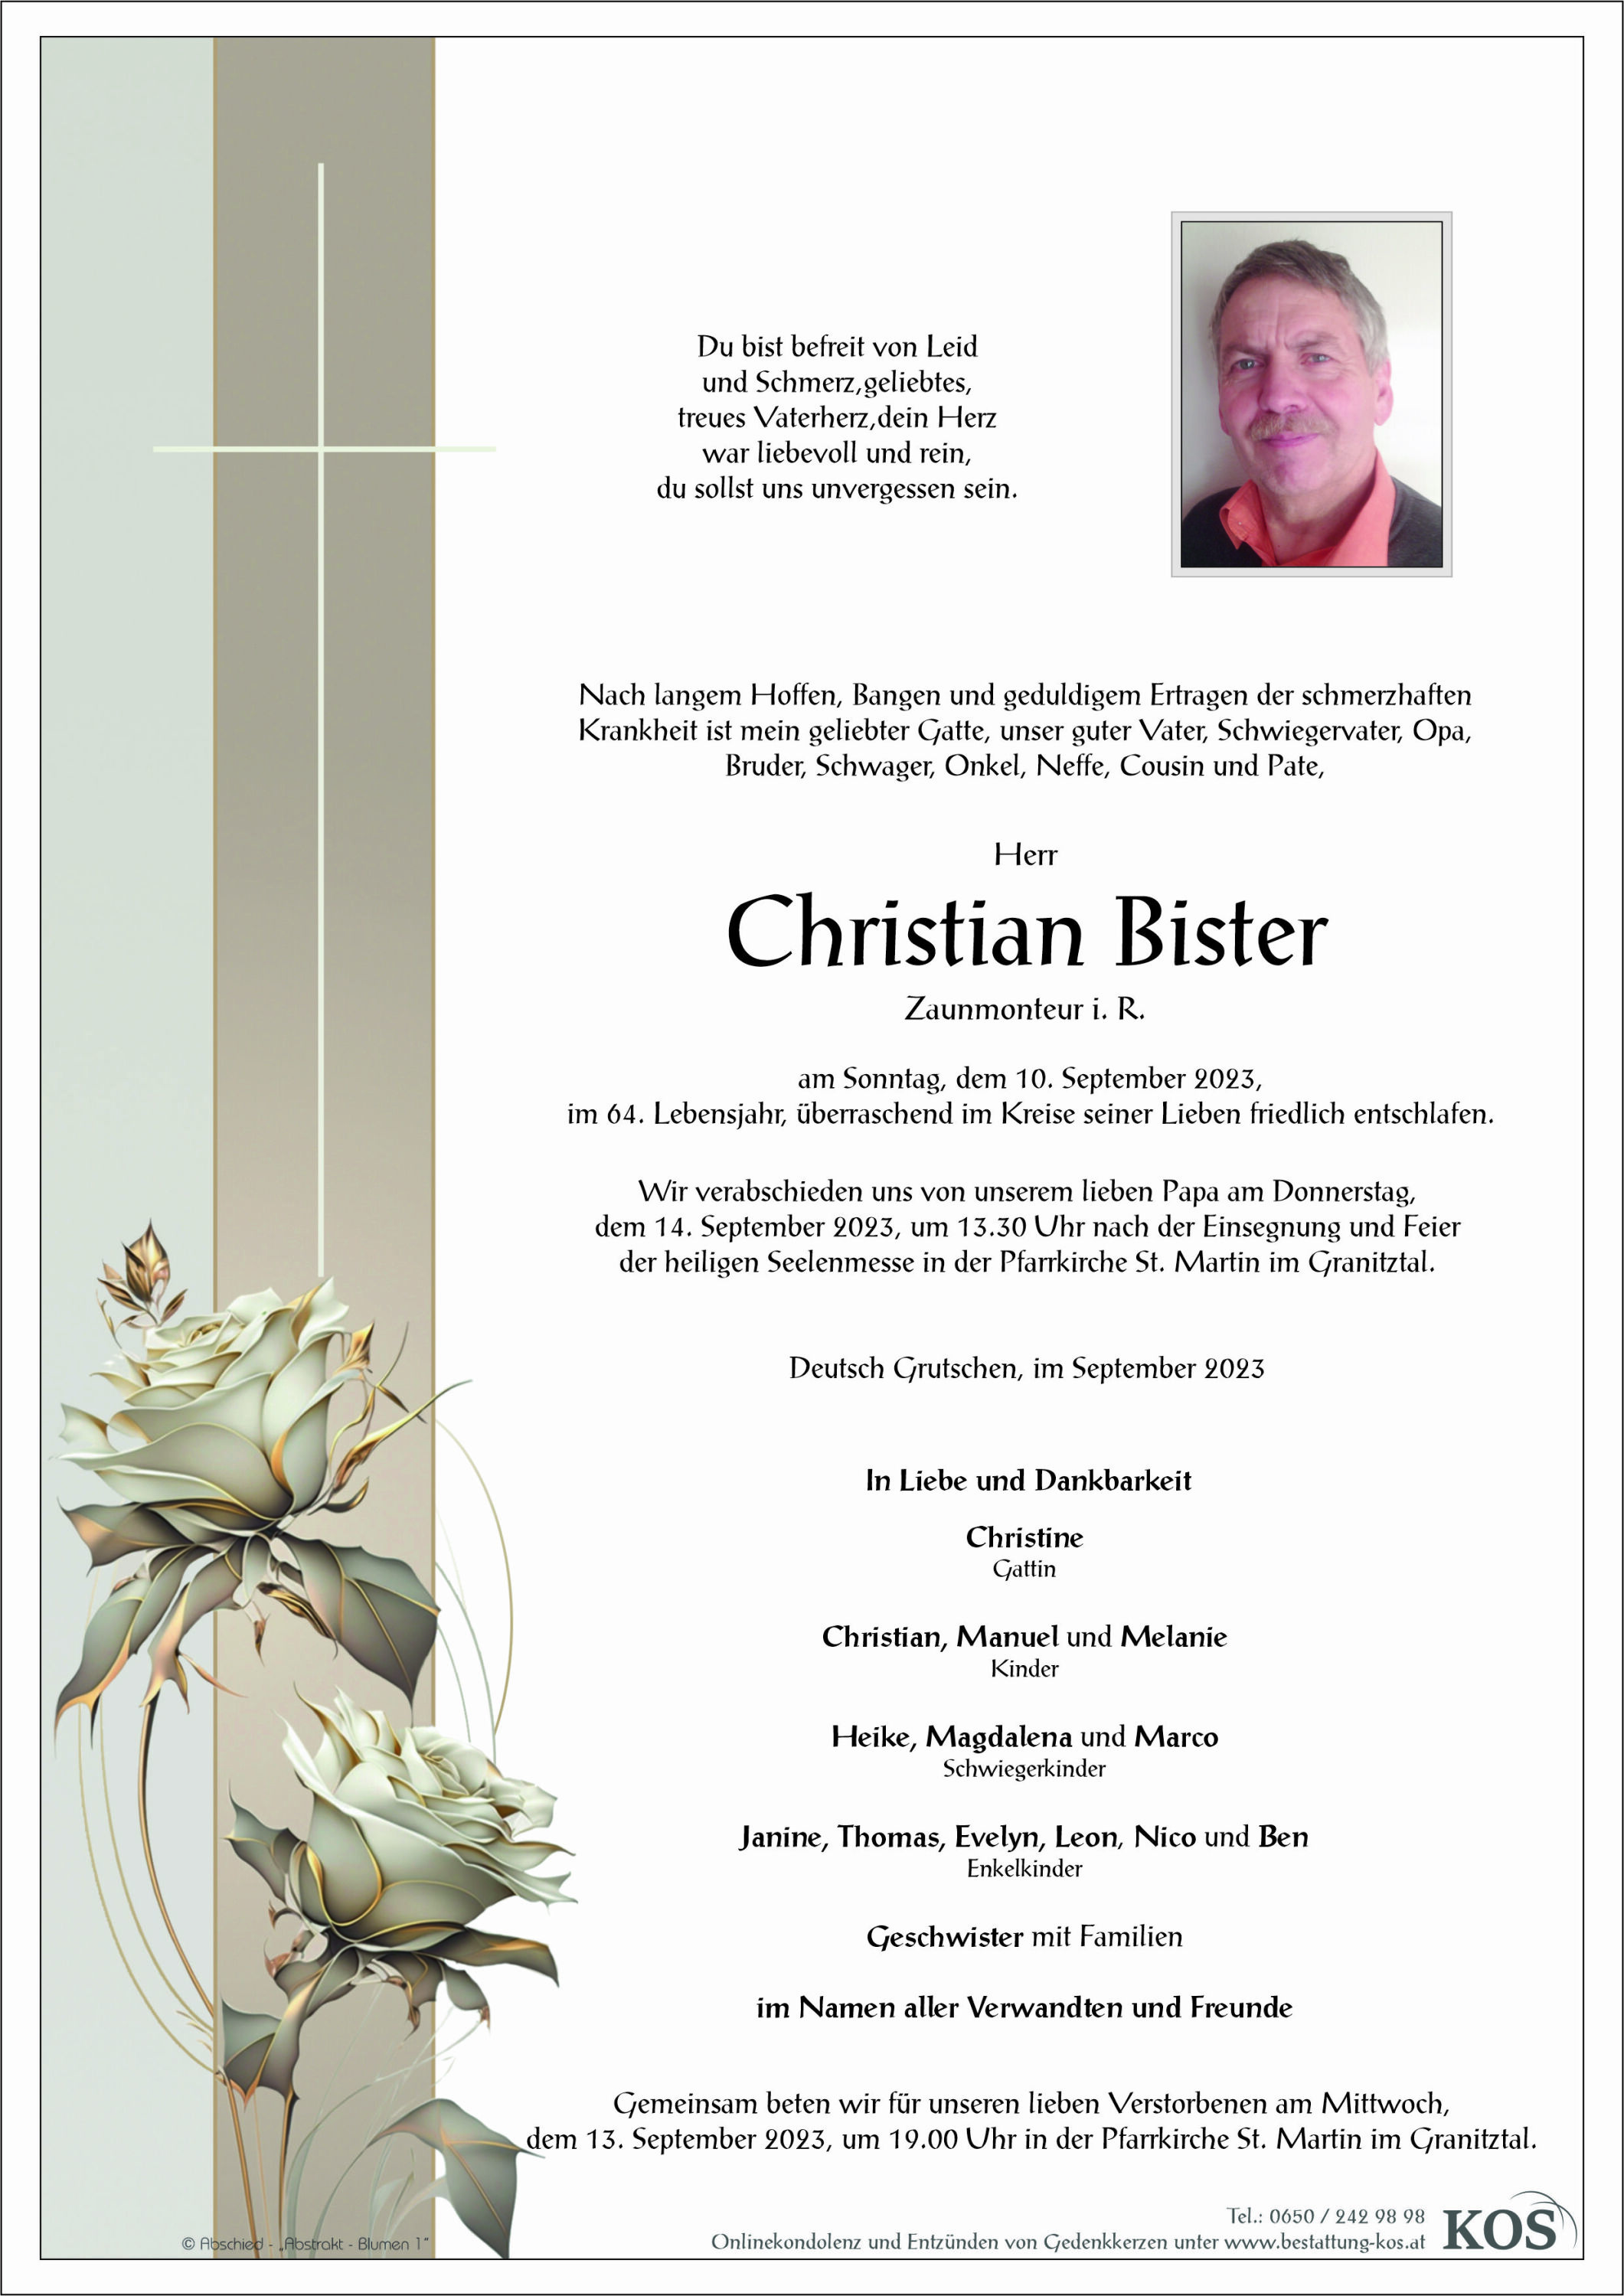 Christian Bister